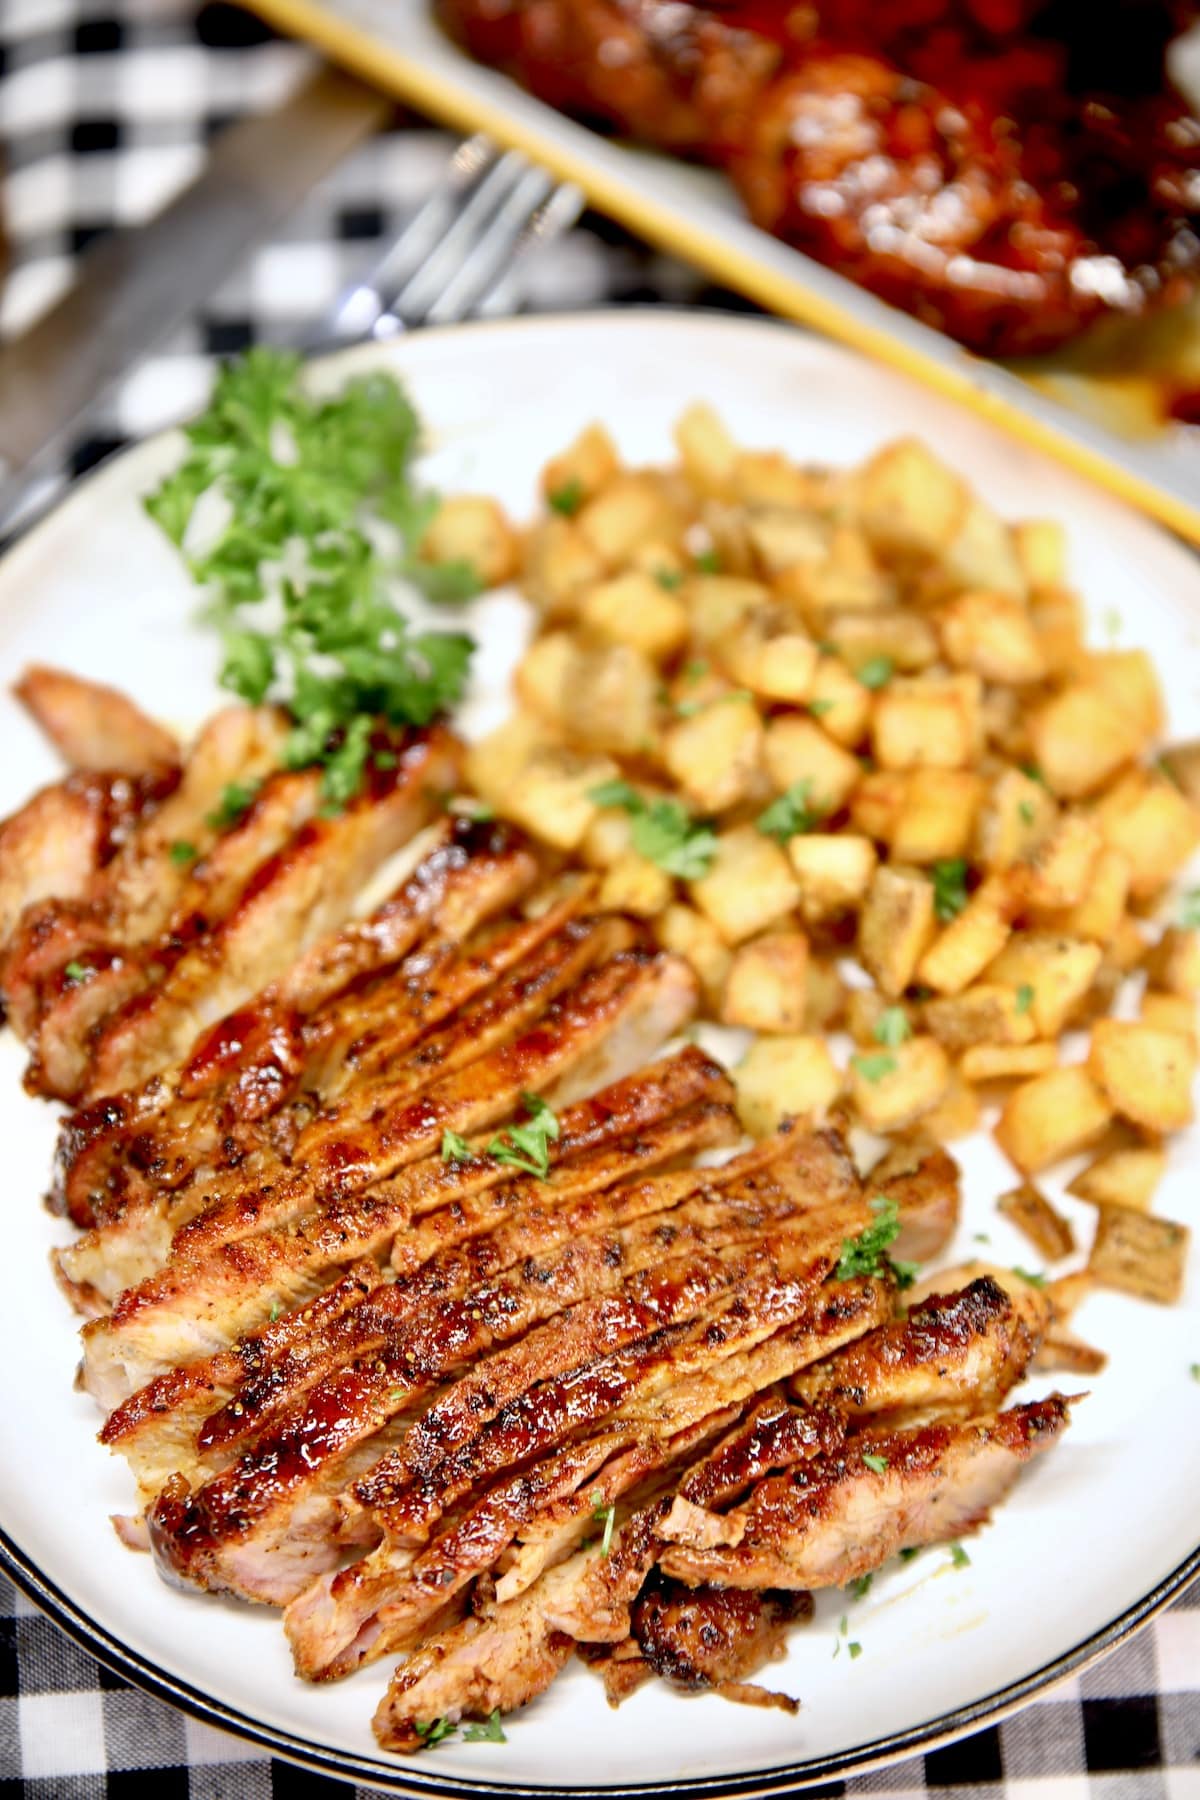 Sliced pork chop with potatoes on a plate.